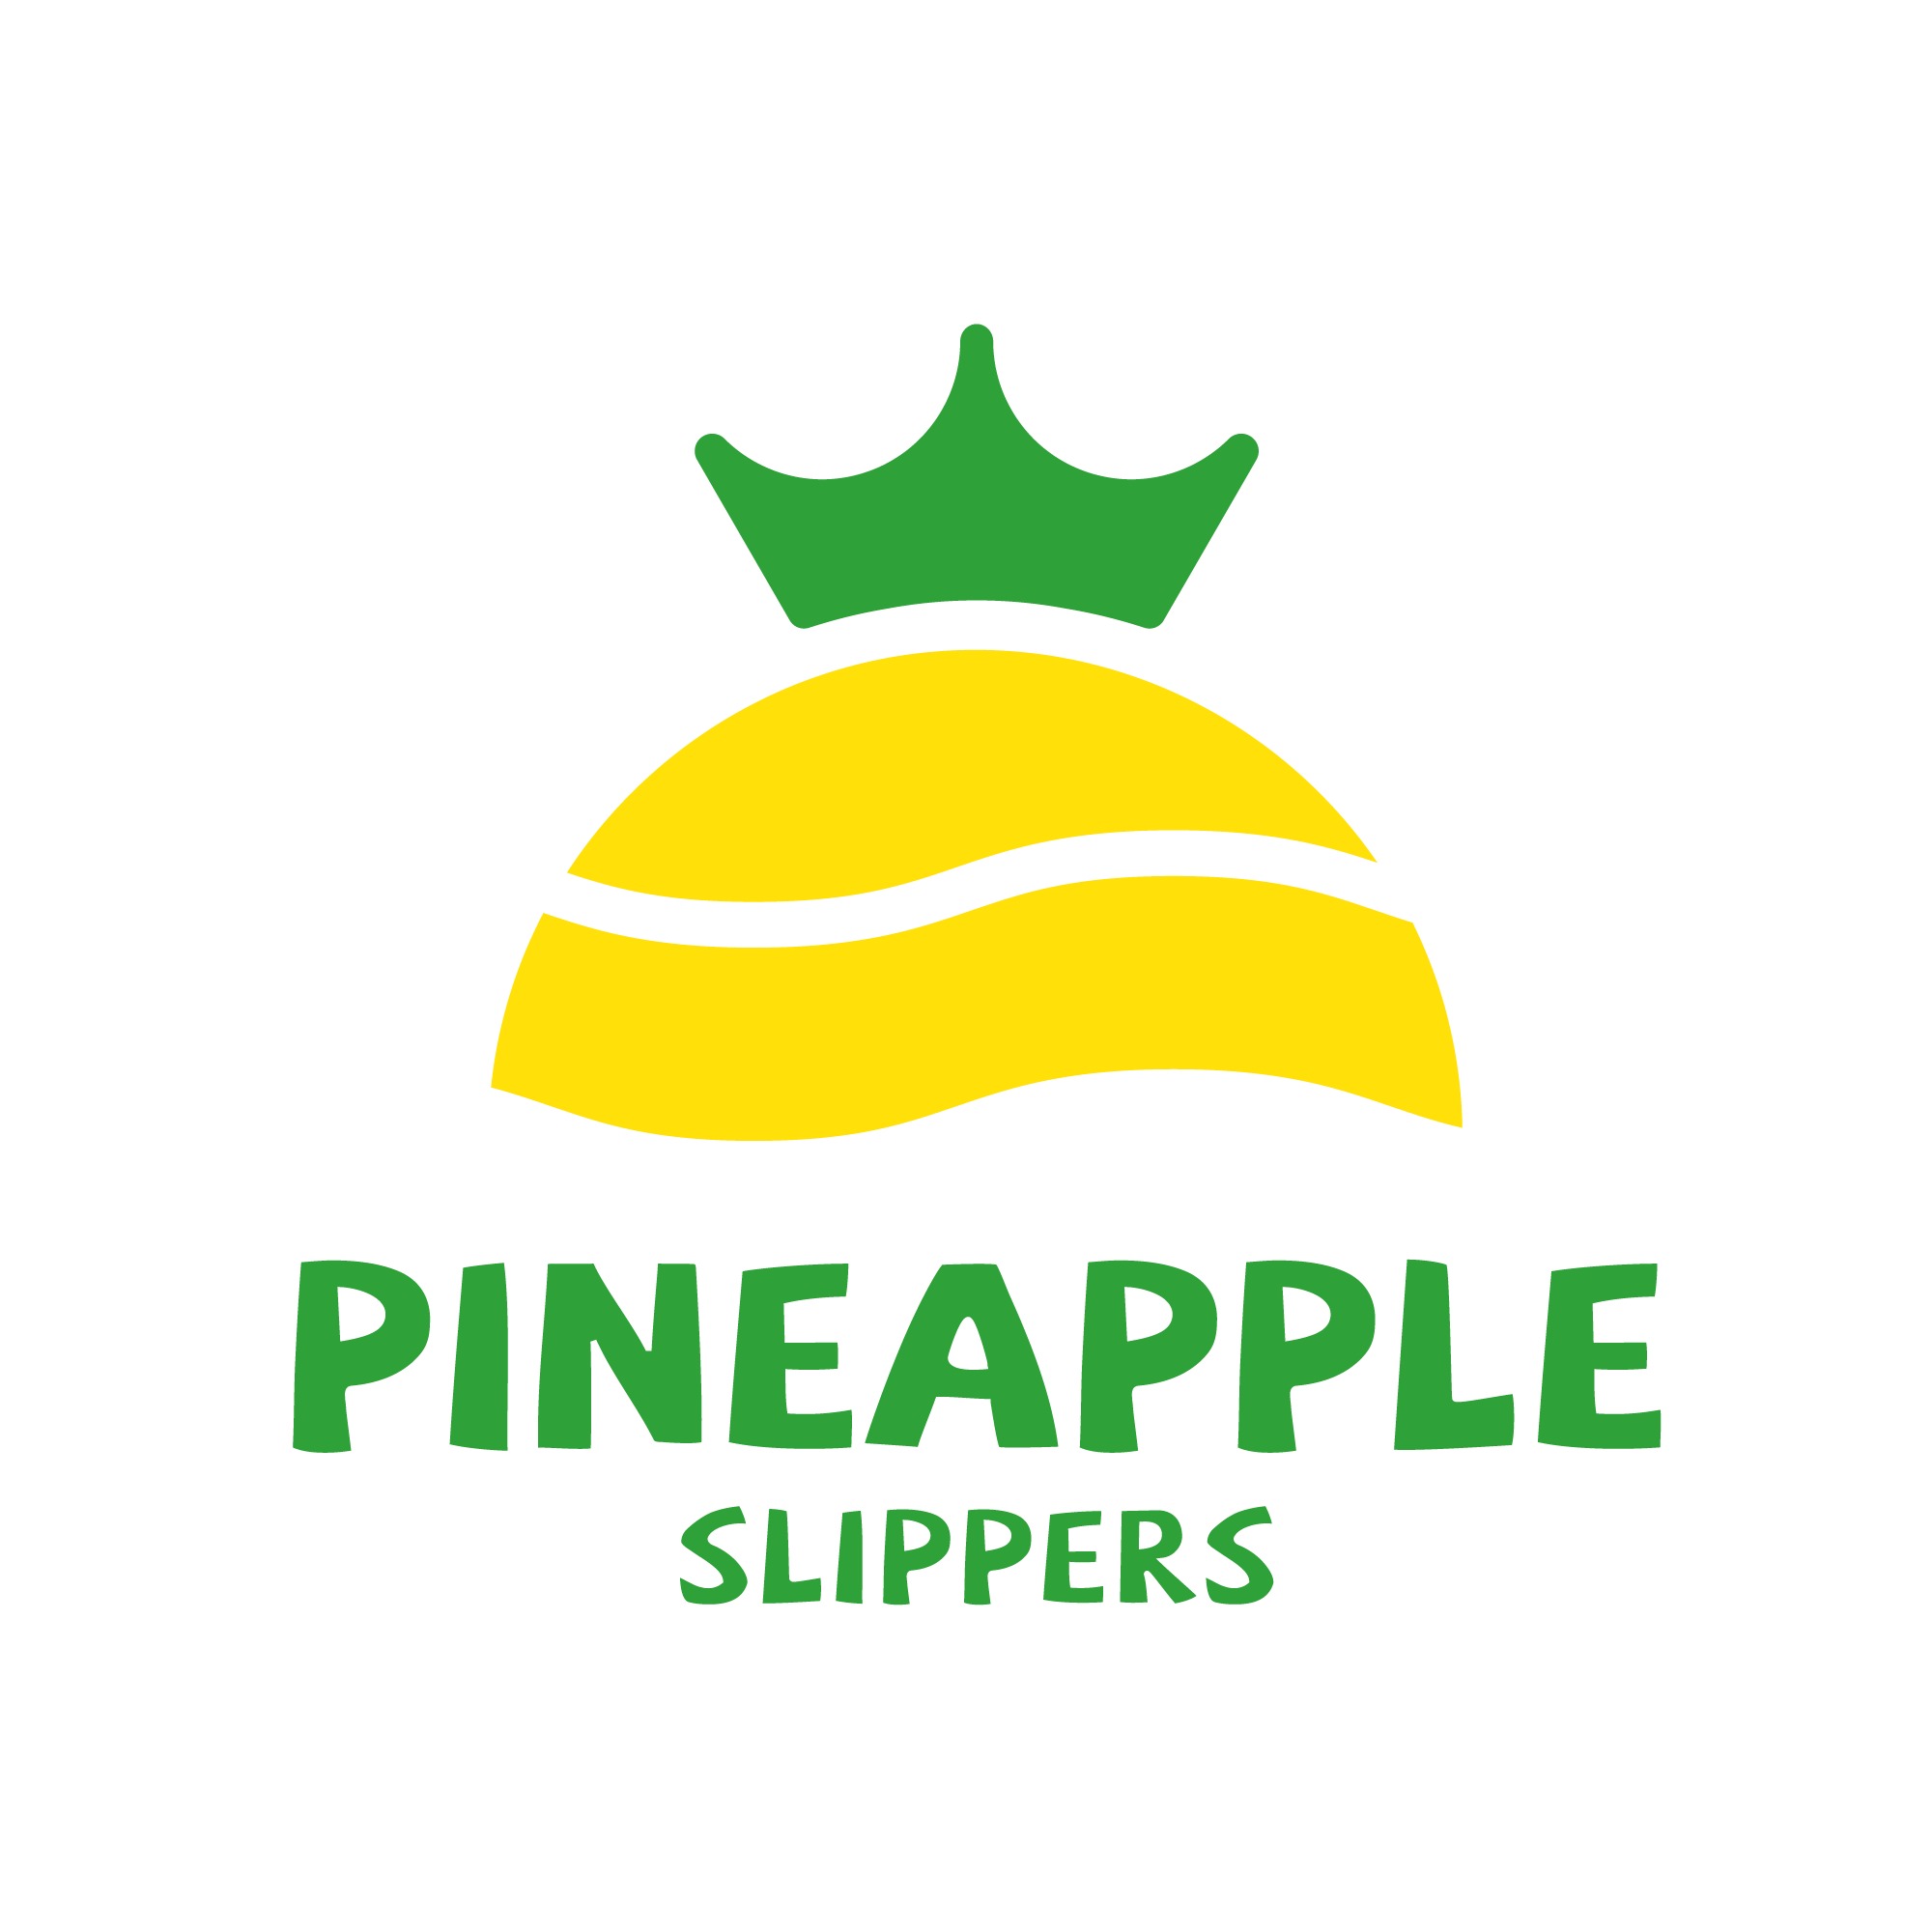 Pineapple slippers